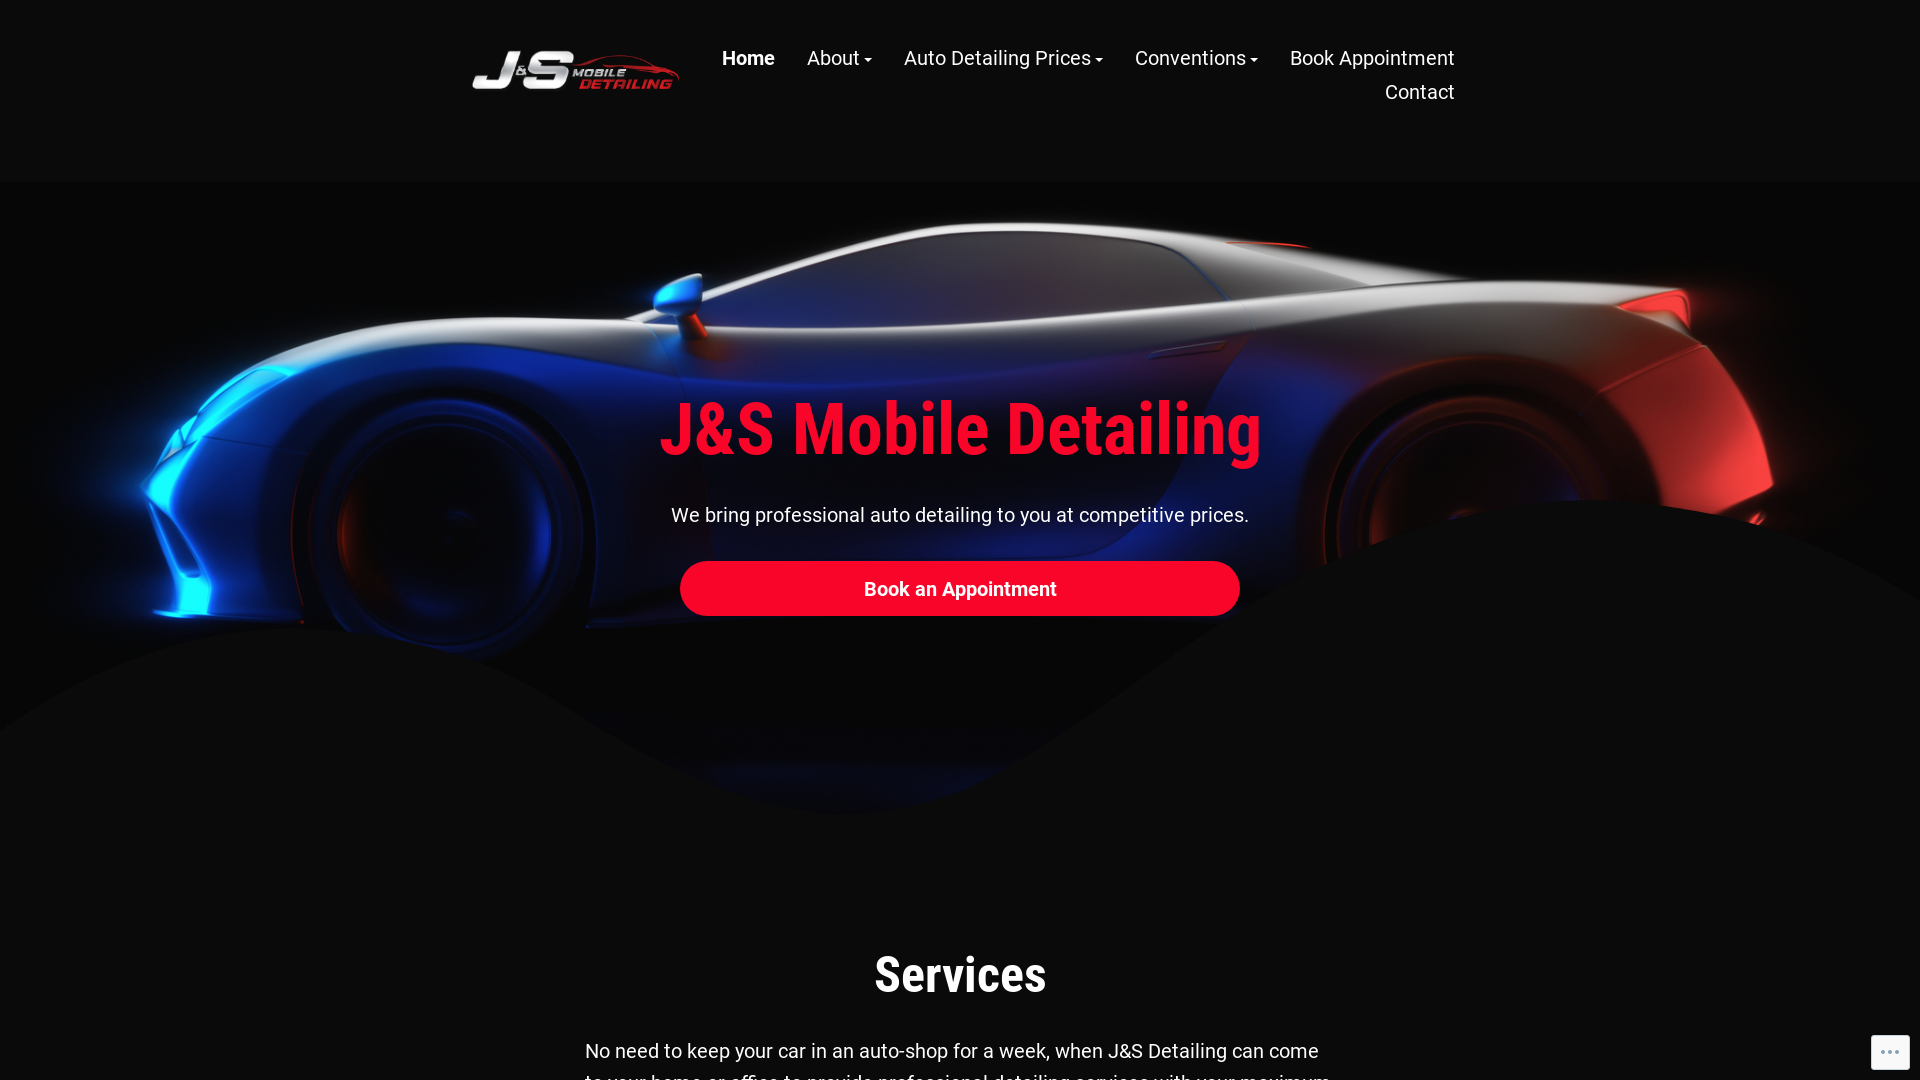 J&S Mobile Detailing